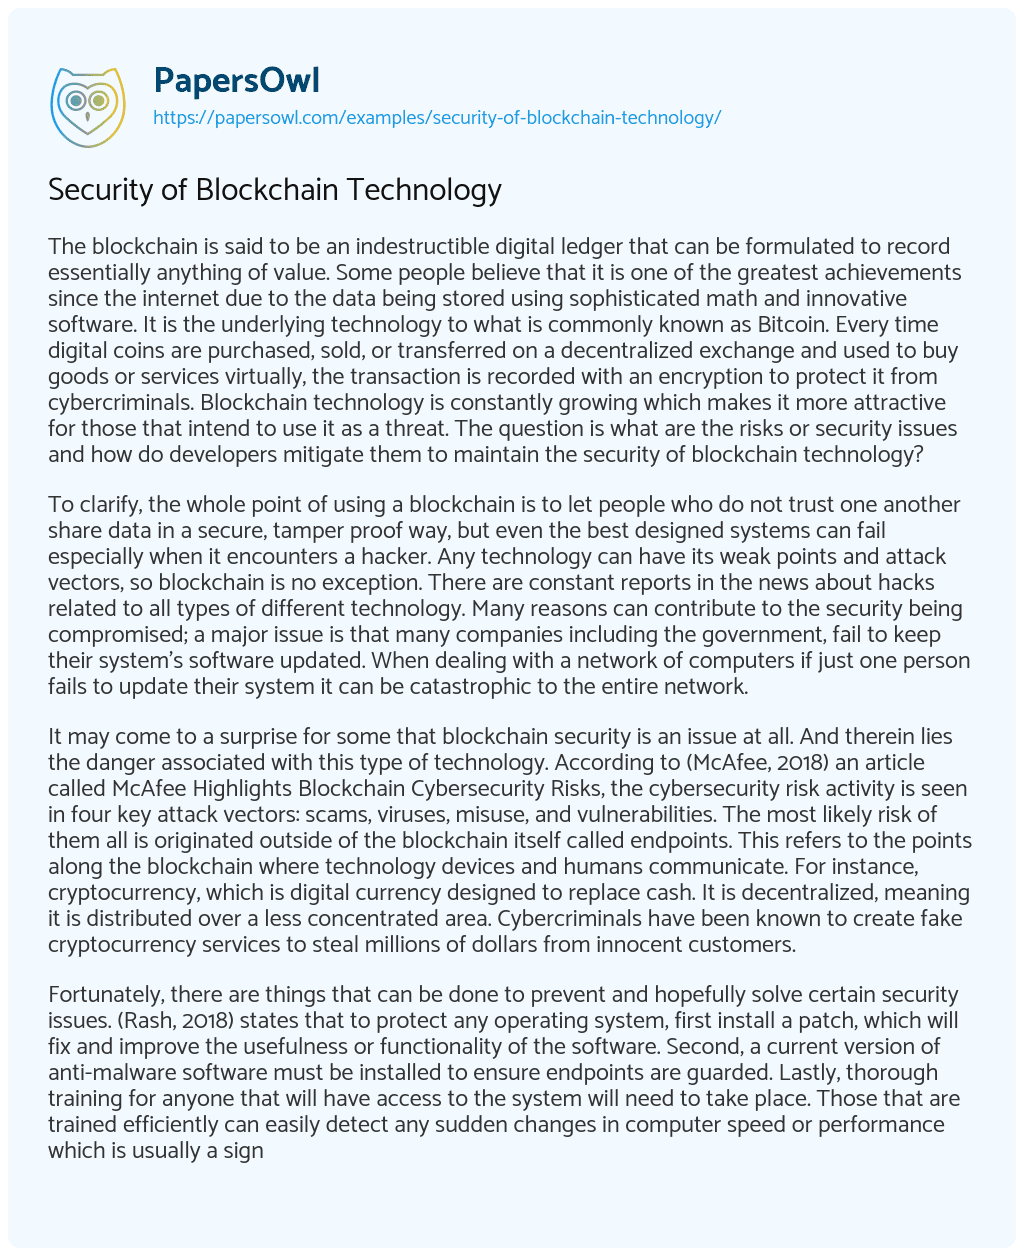 Essay on Security of Blockchain Technology